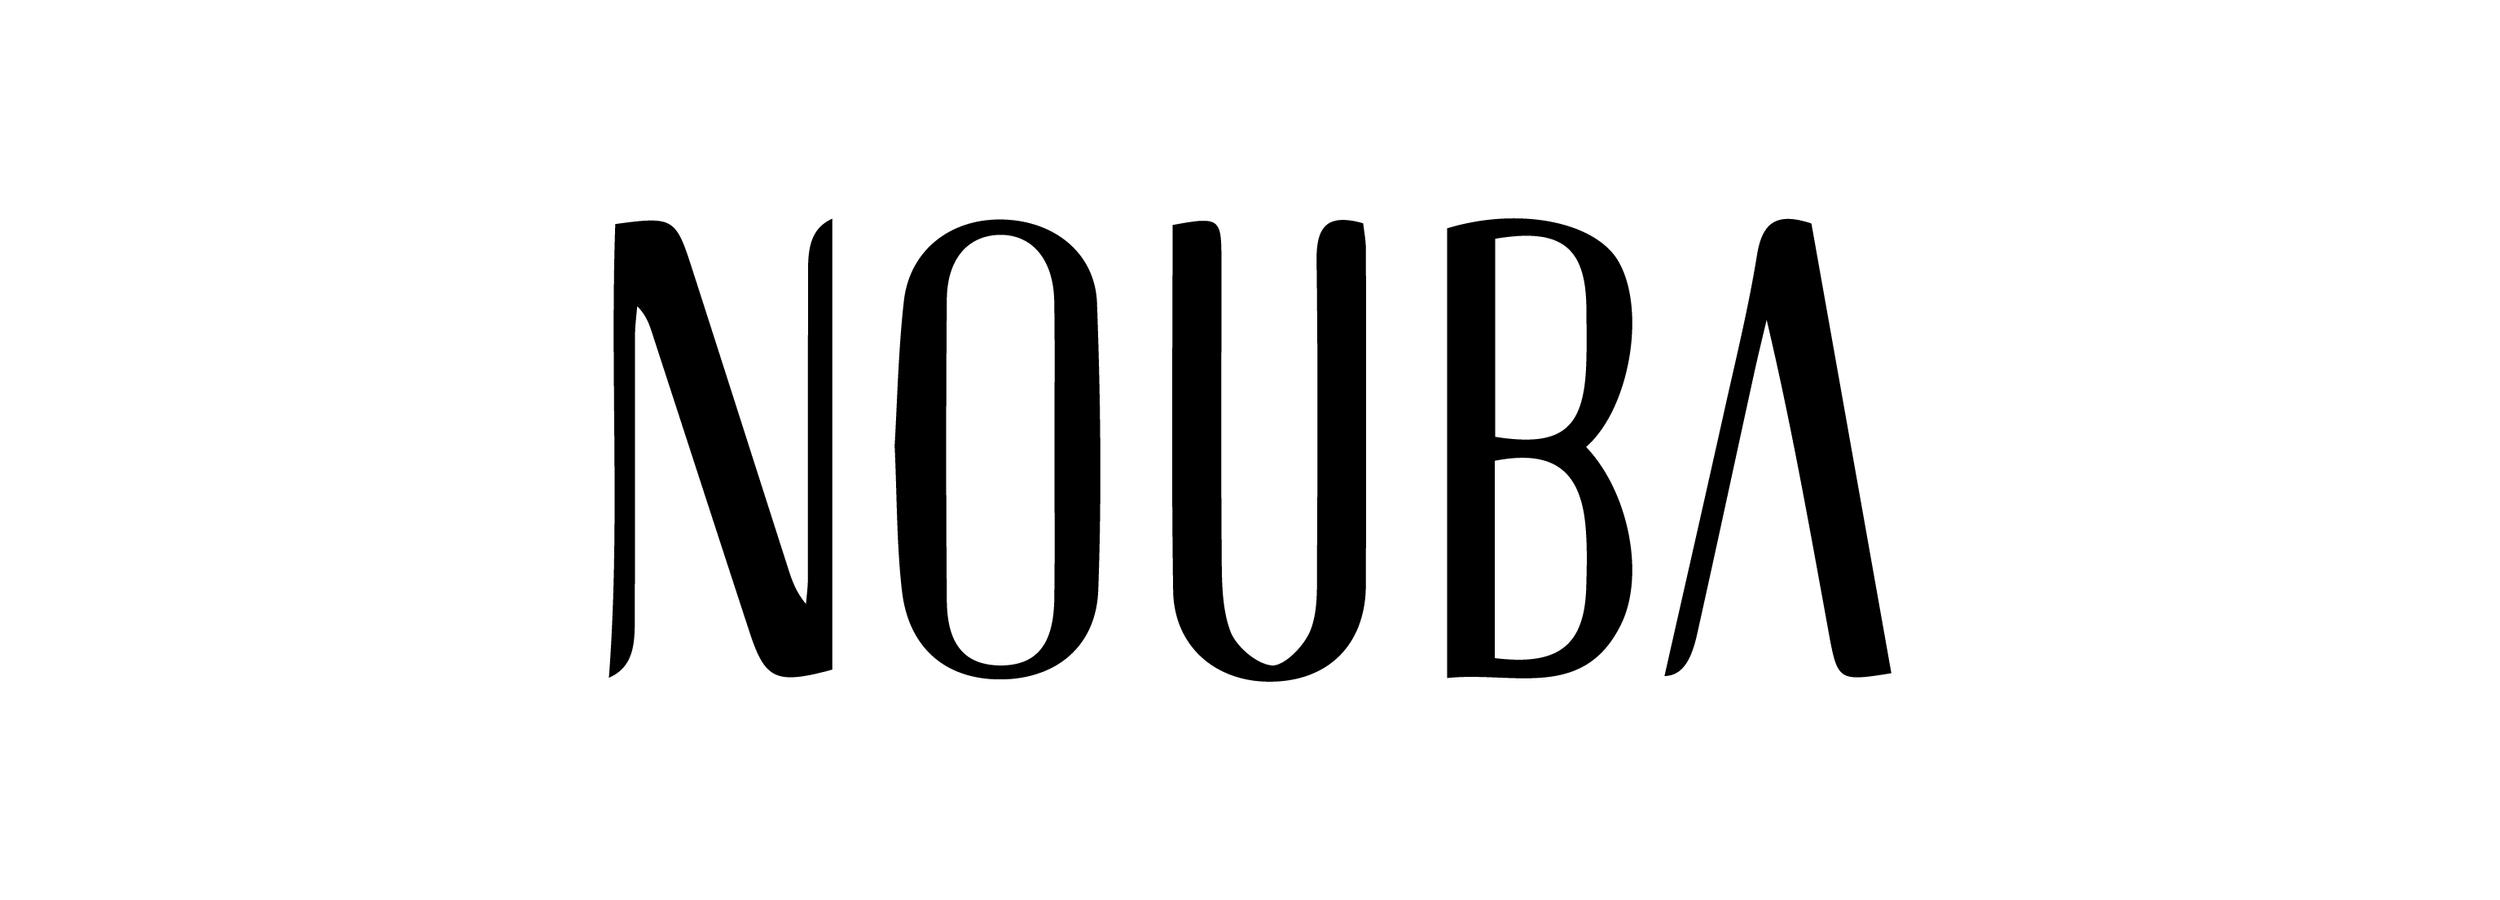 Nouba-Logo-01.png